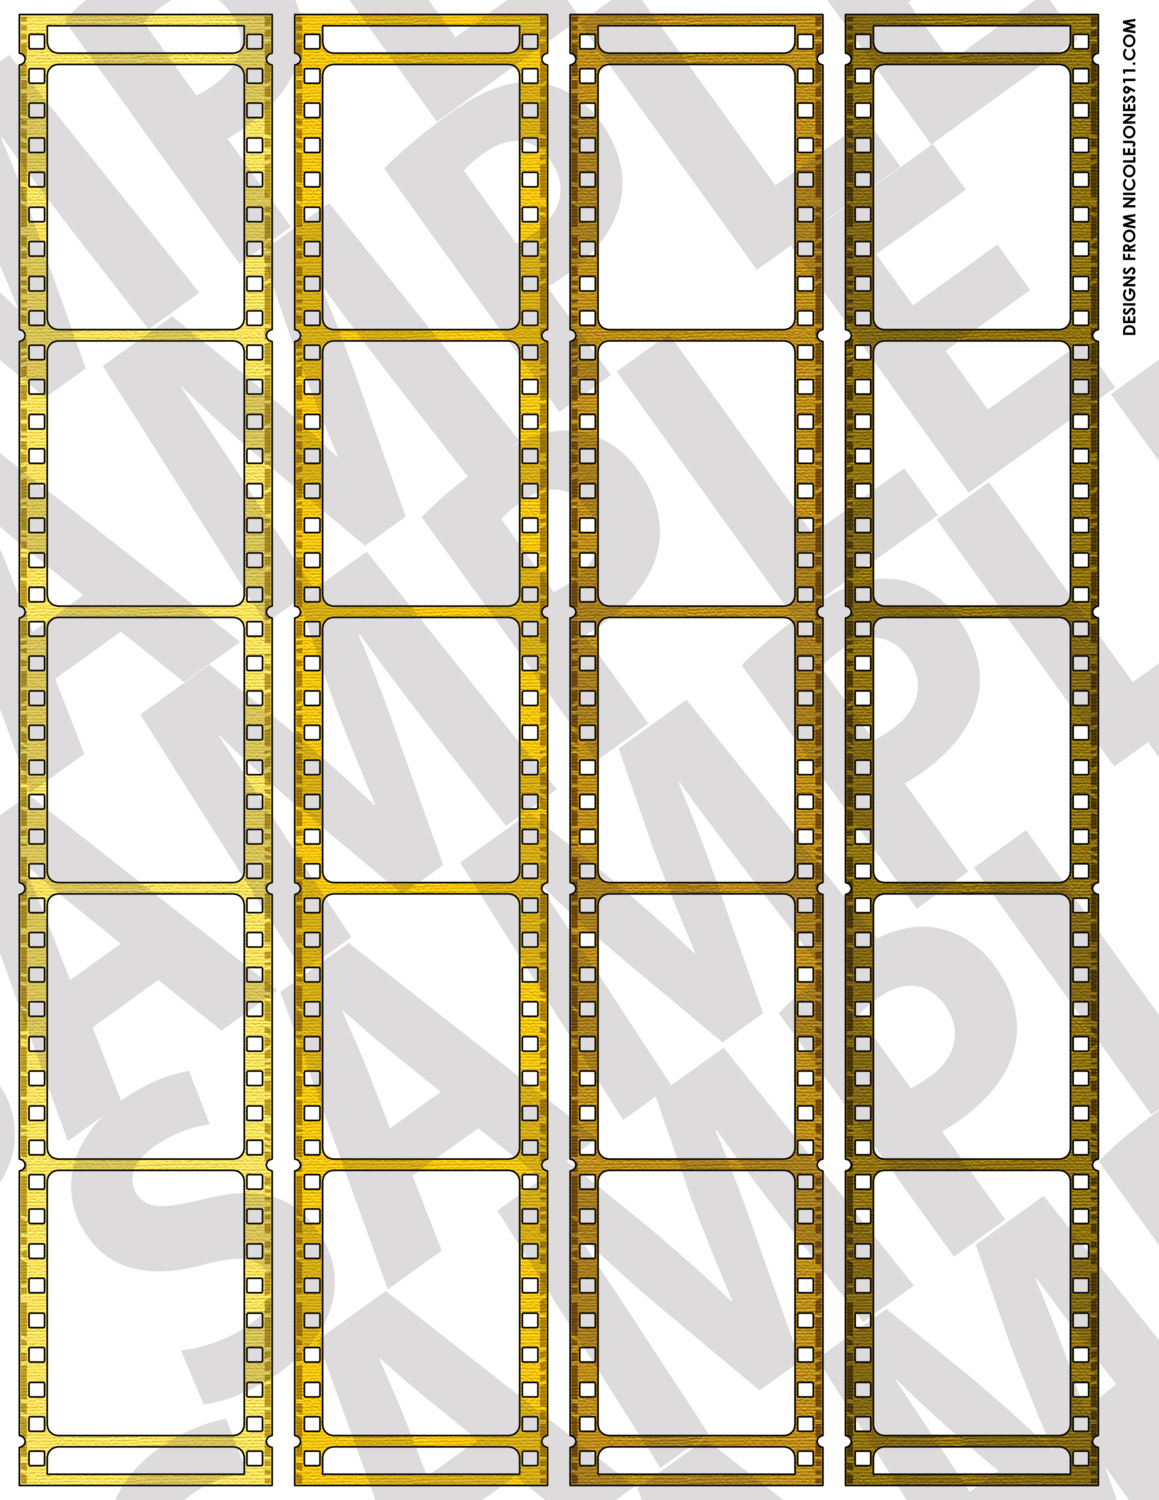 More Yellow - Film Reels